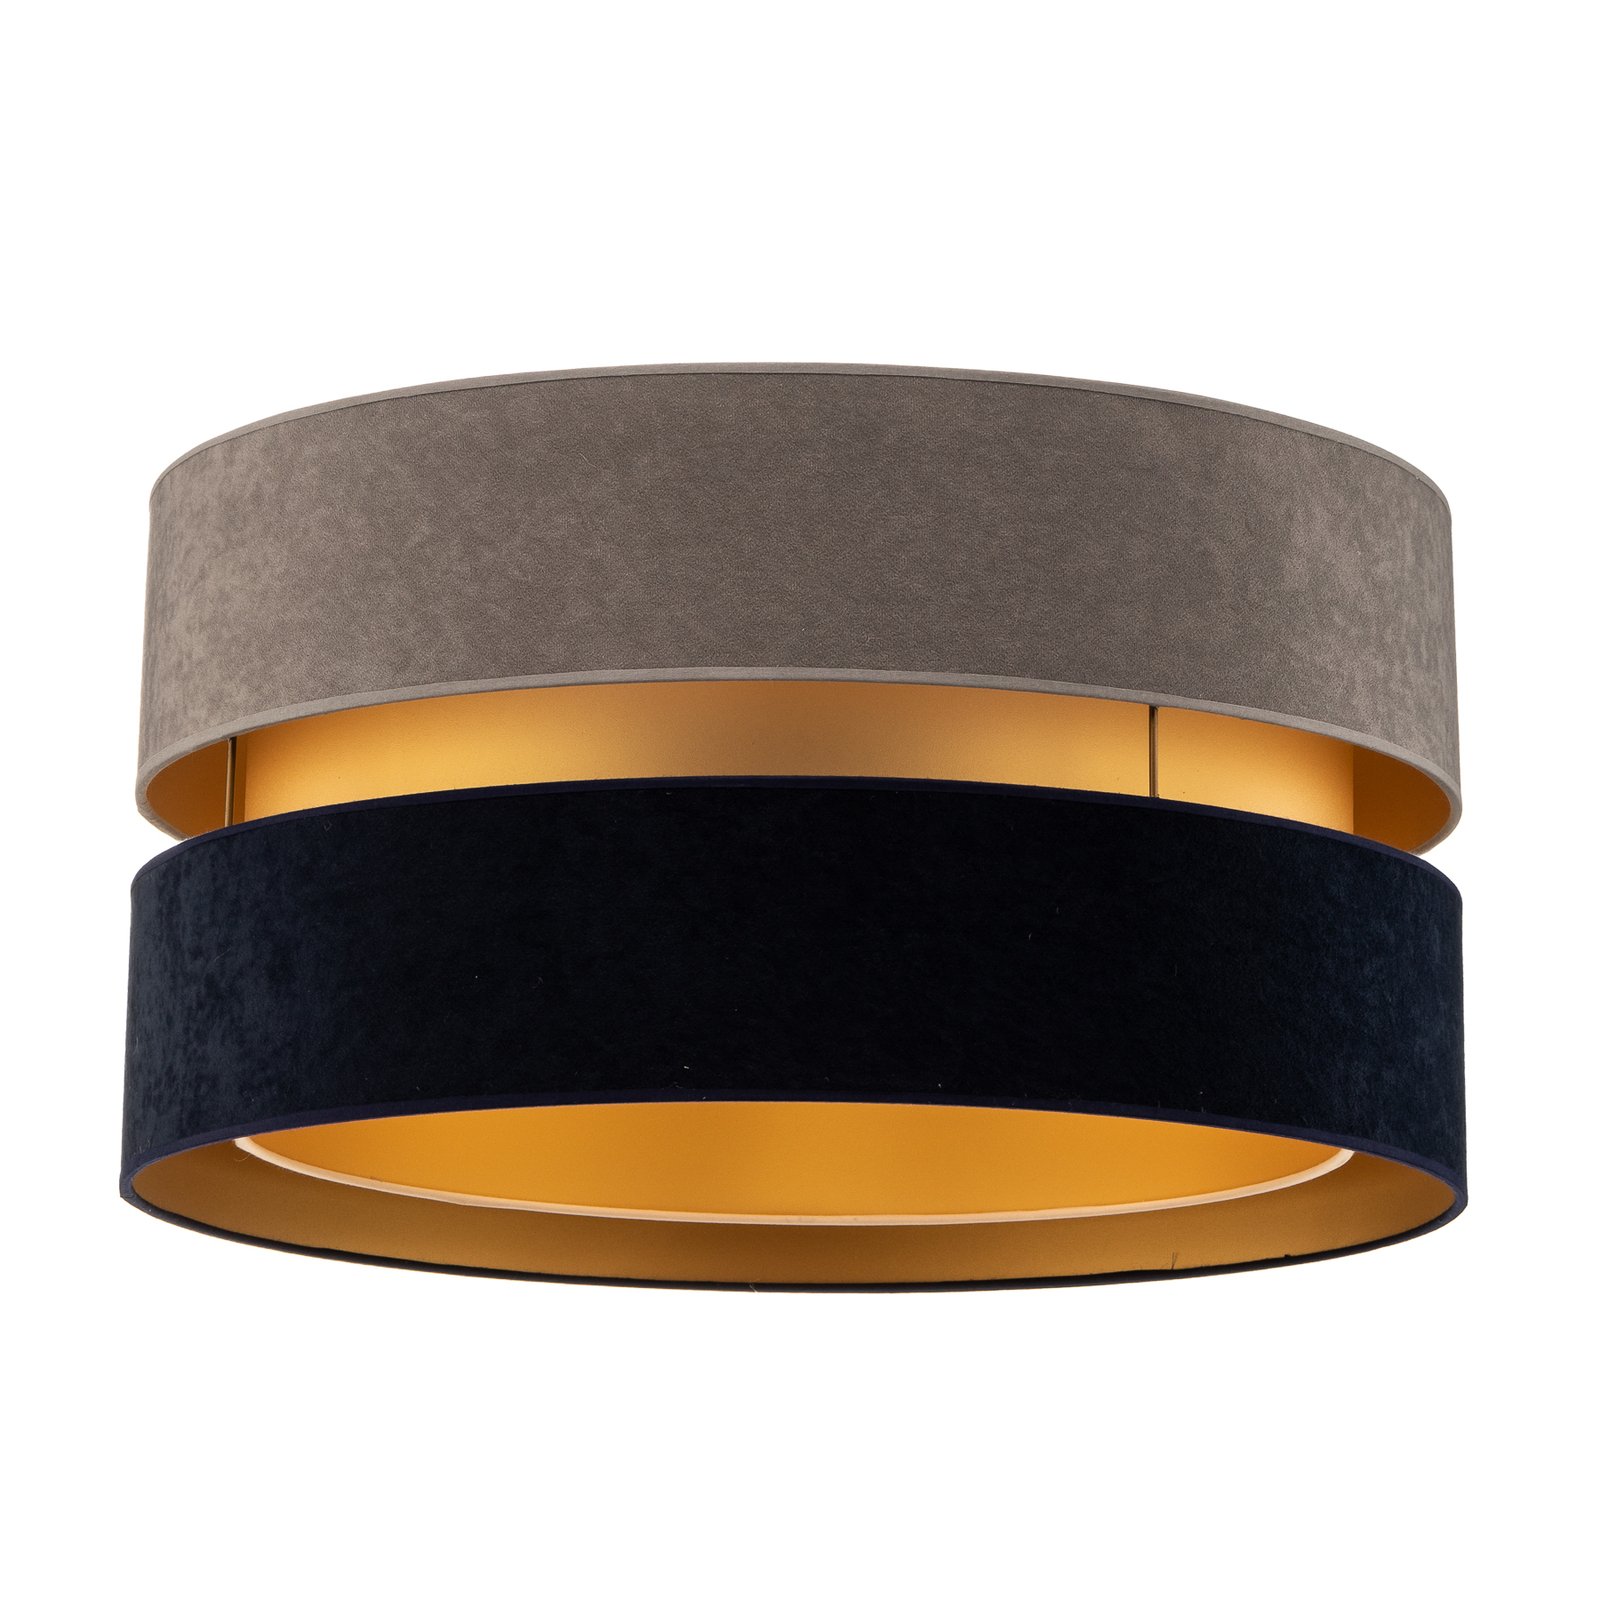 Taklampe Duo, marineblå/grå/gull, Ø60cm